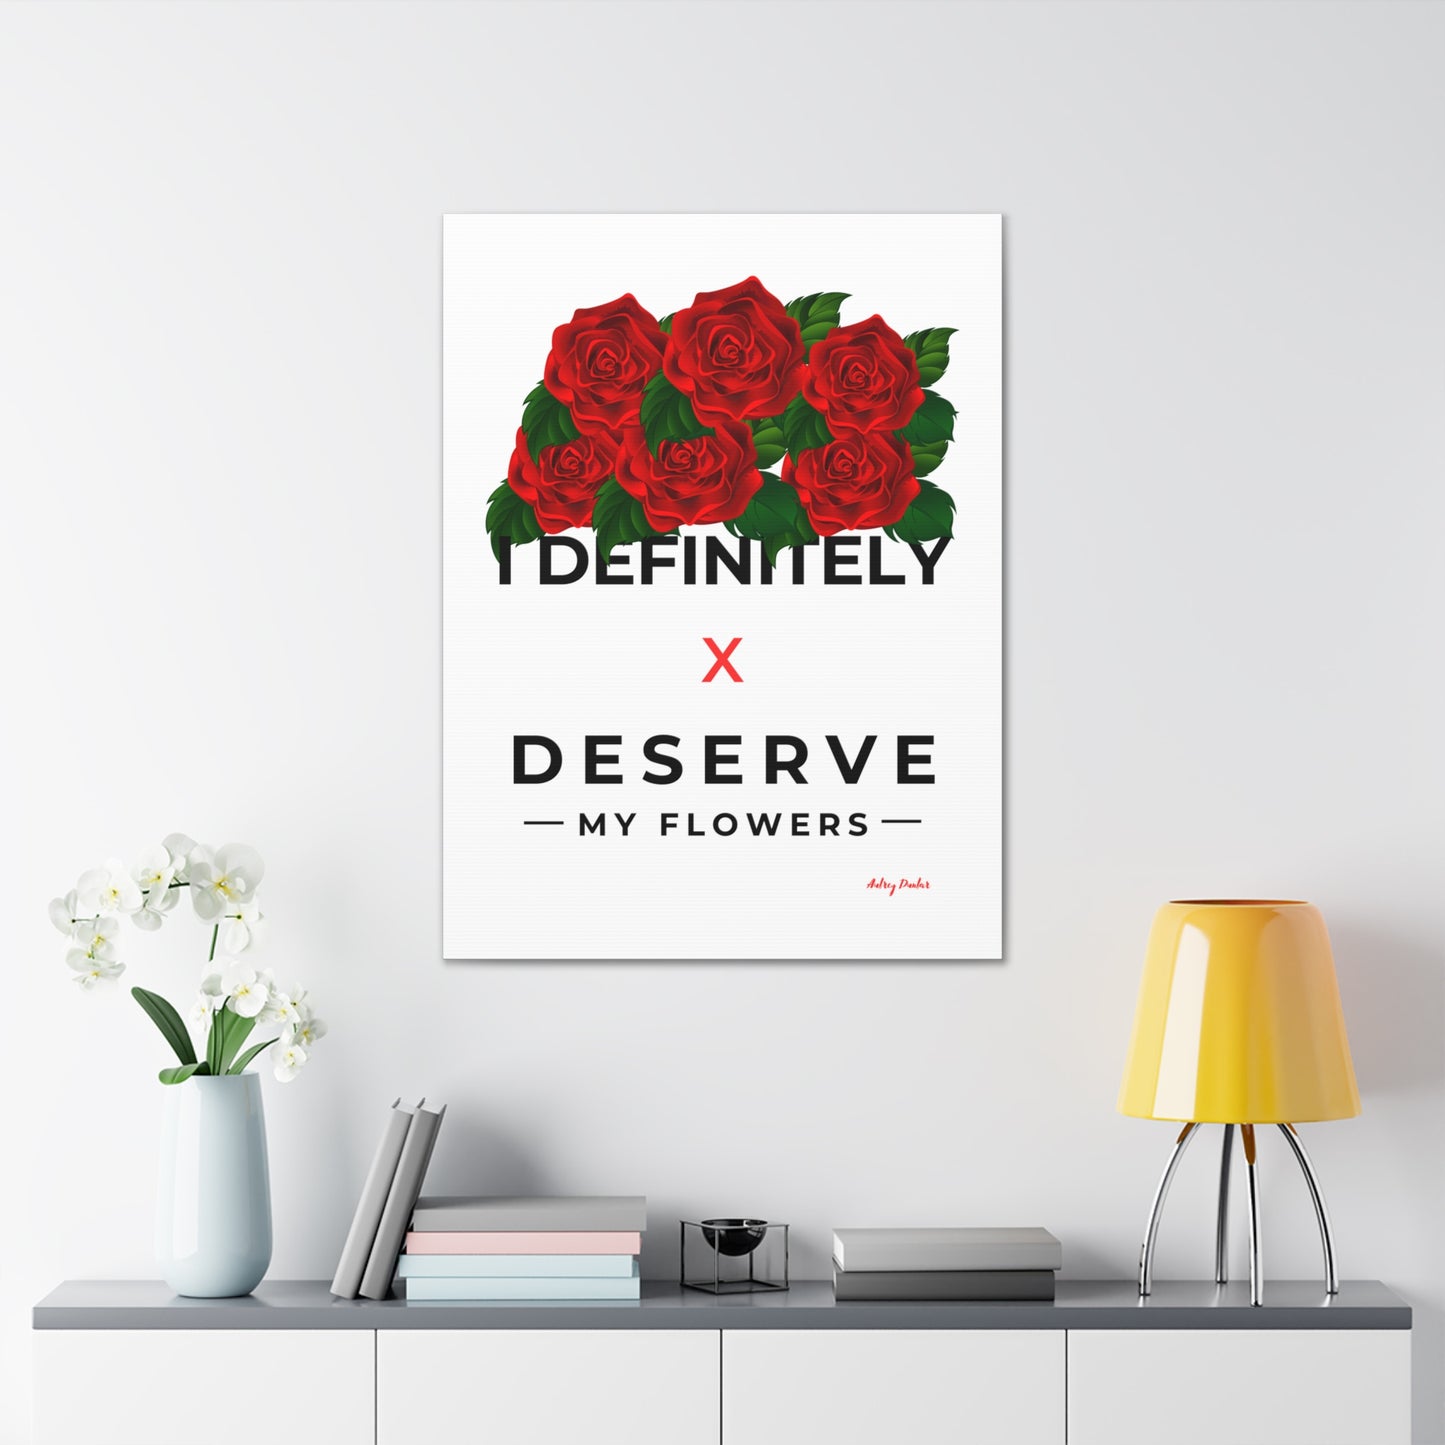 I Deserve My Flowers (White) - Wall Art